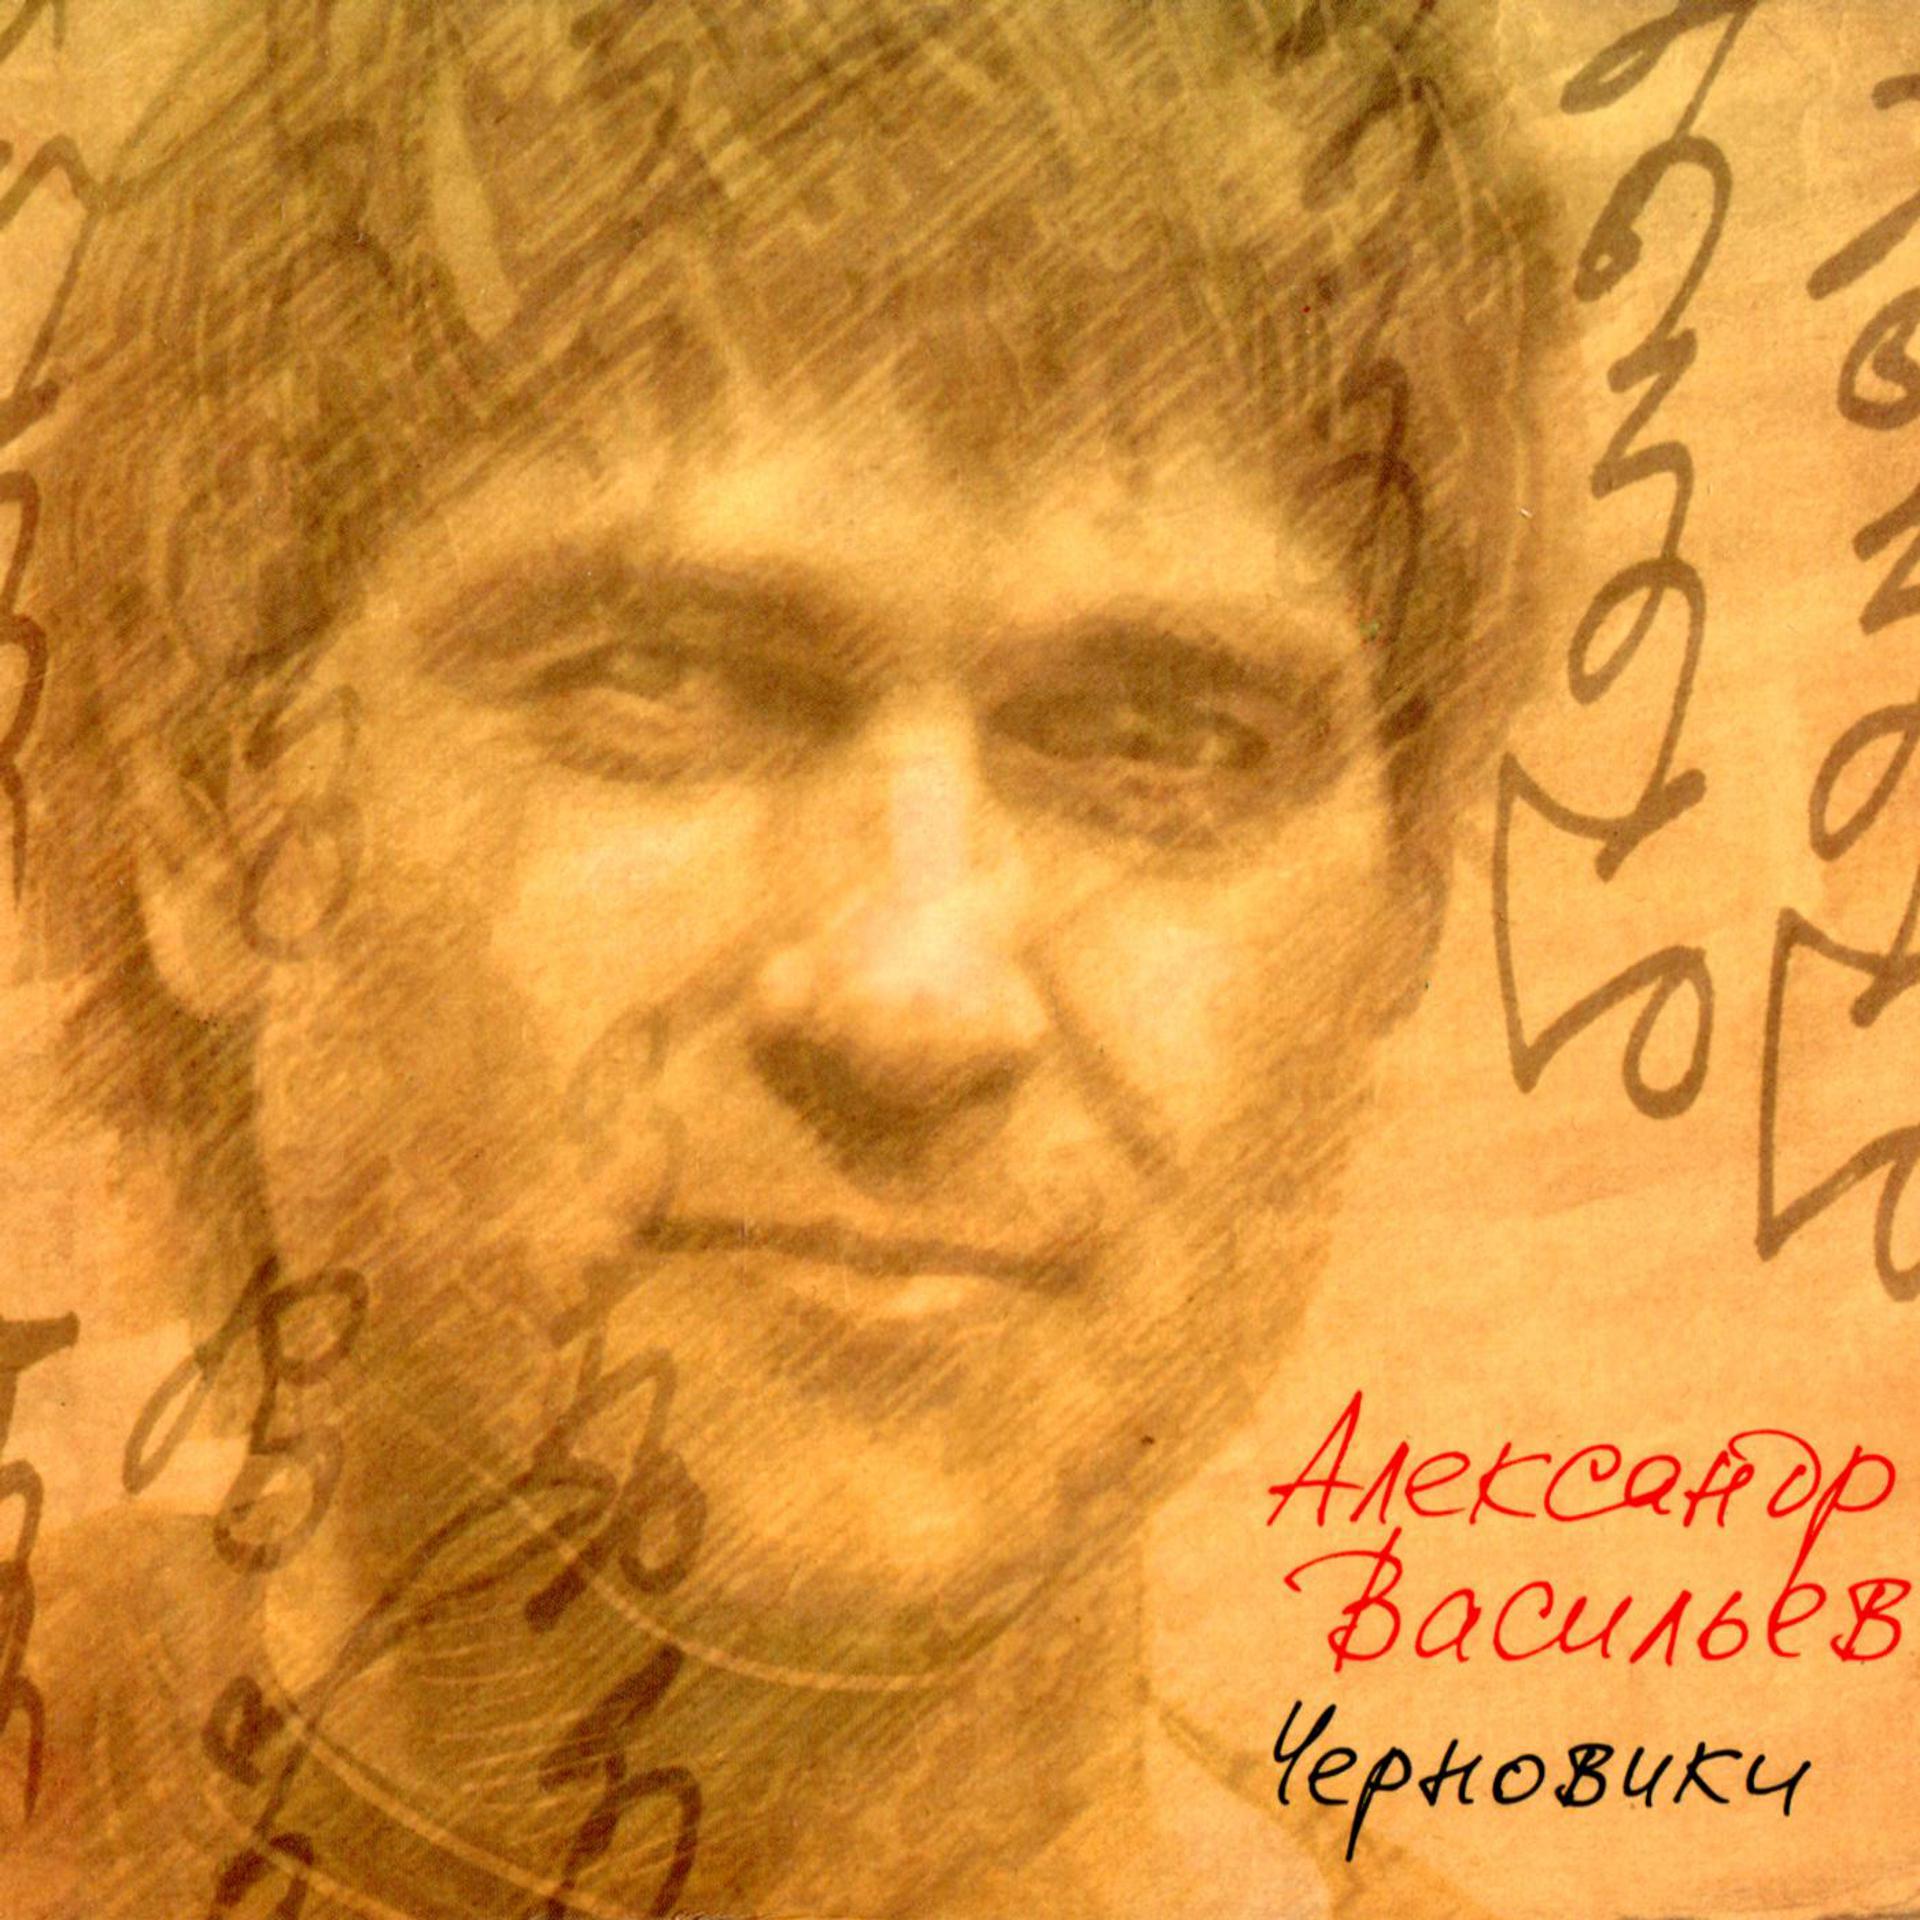 Постер альбома Черновики